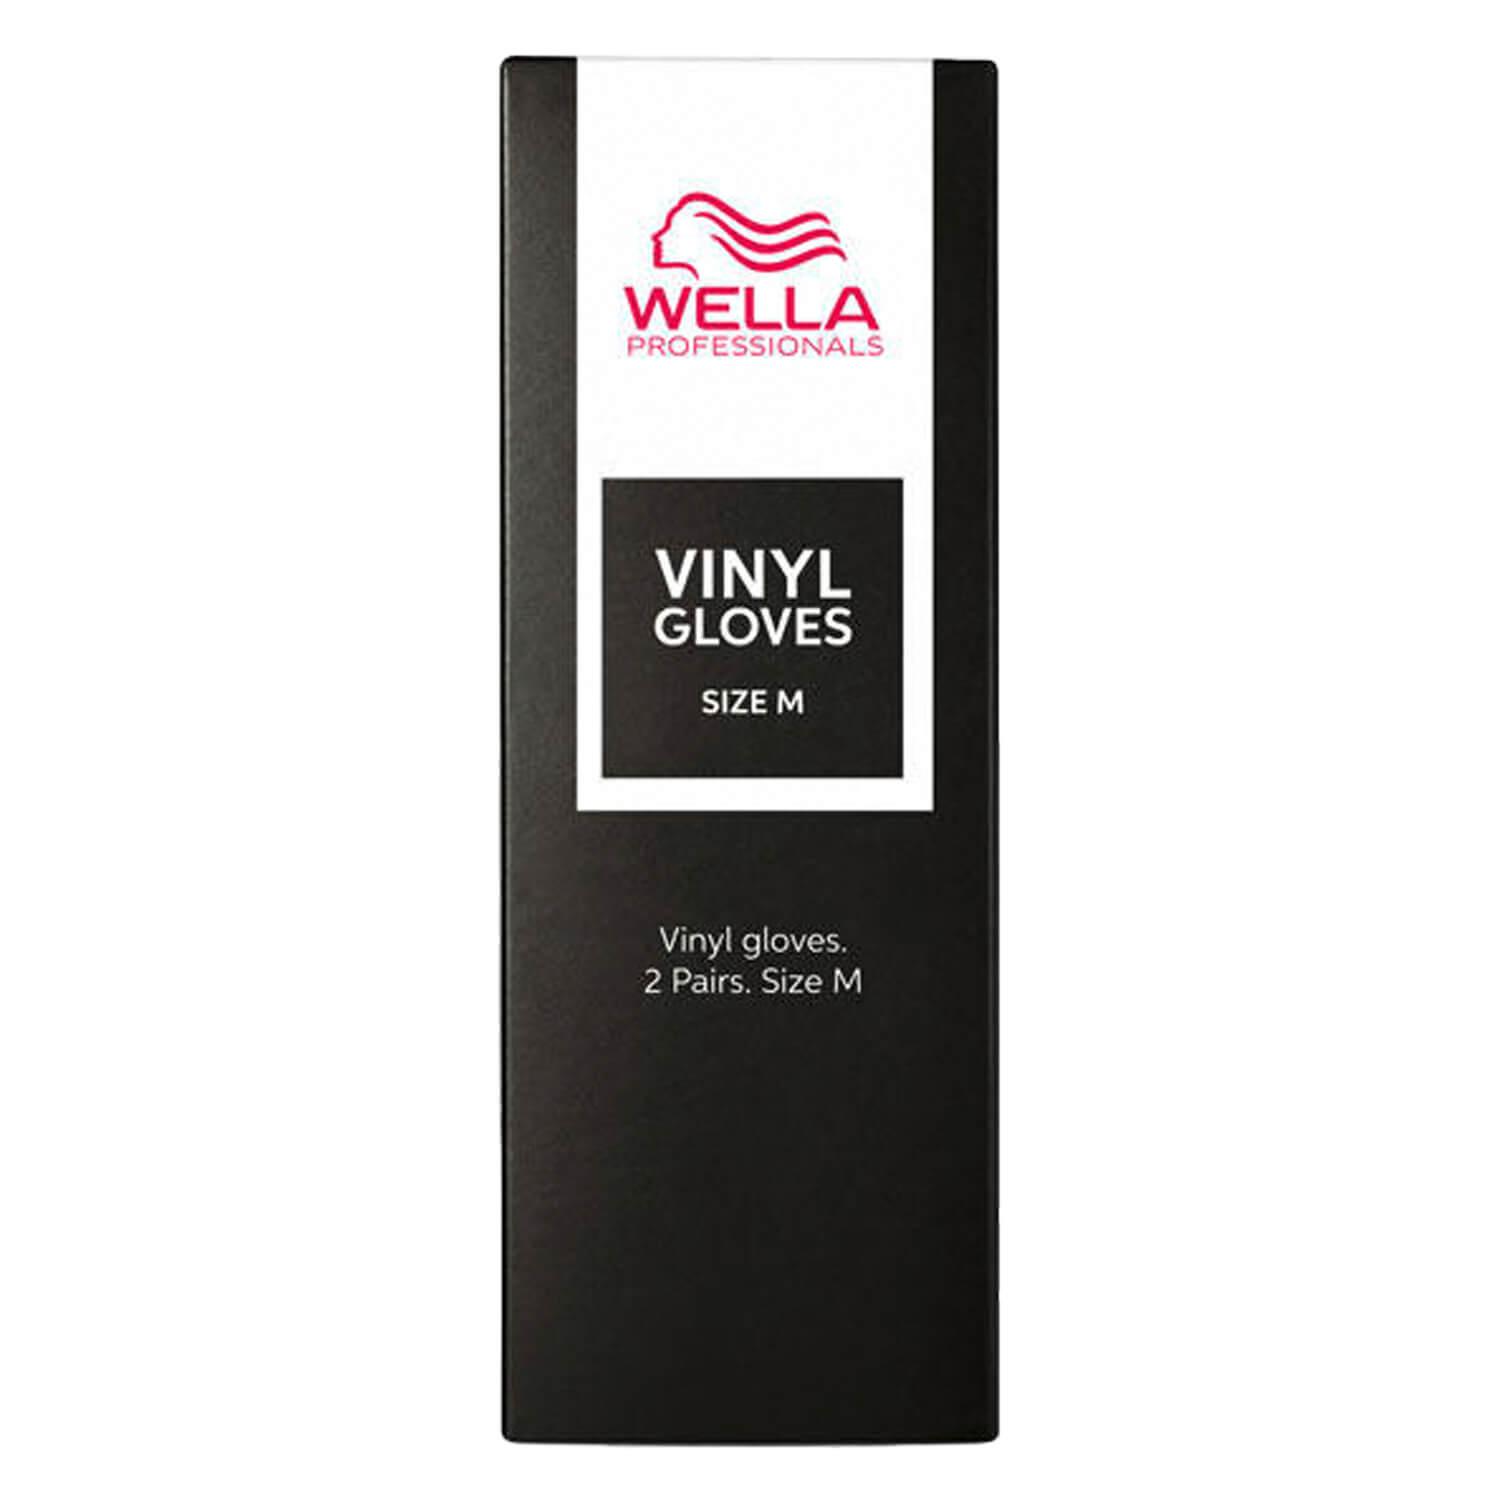 Wella Tools - Vinyl Protective Gloves